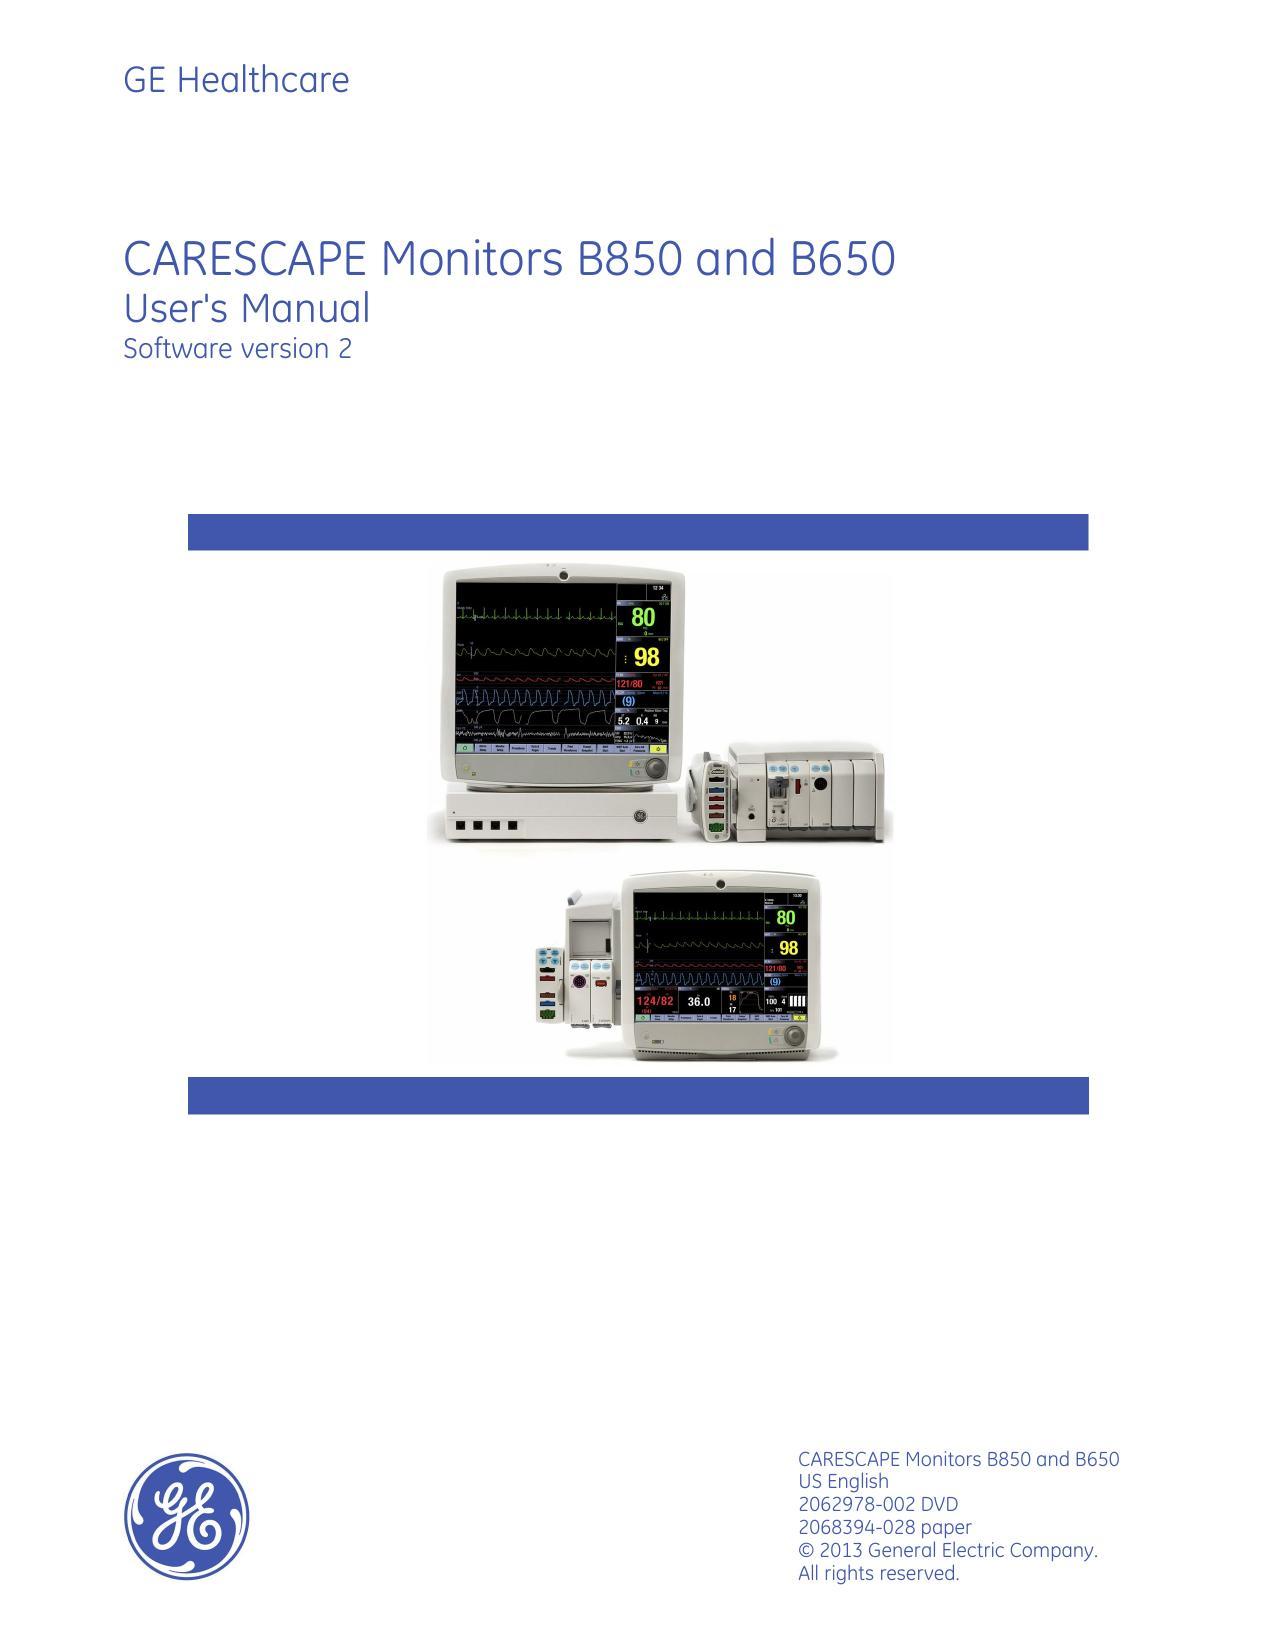 carescape-monitors-b850-and-b650-user-manual---software-version-2.pdf